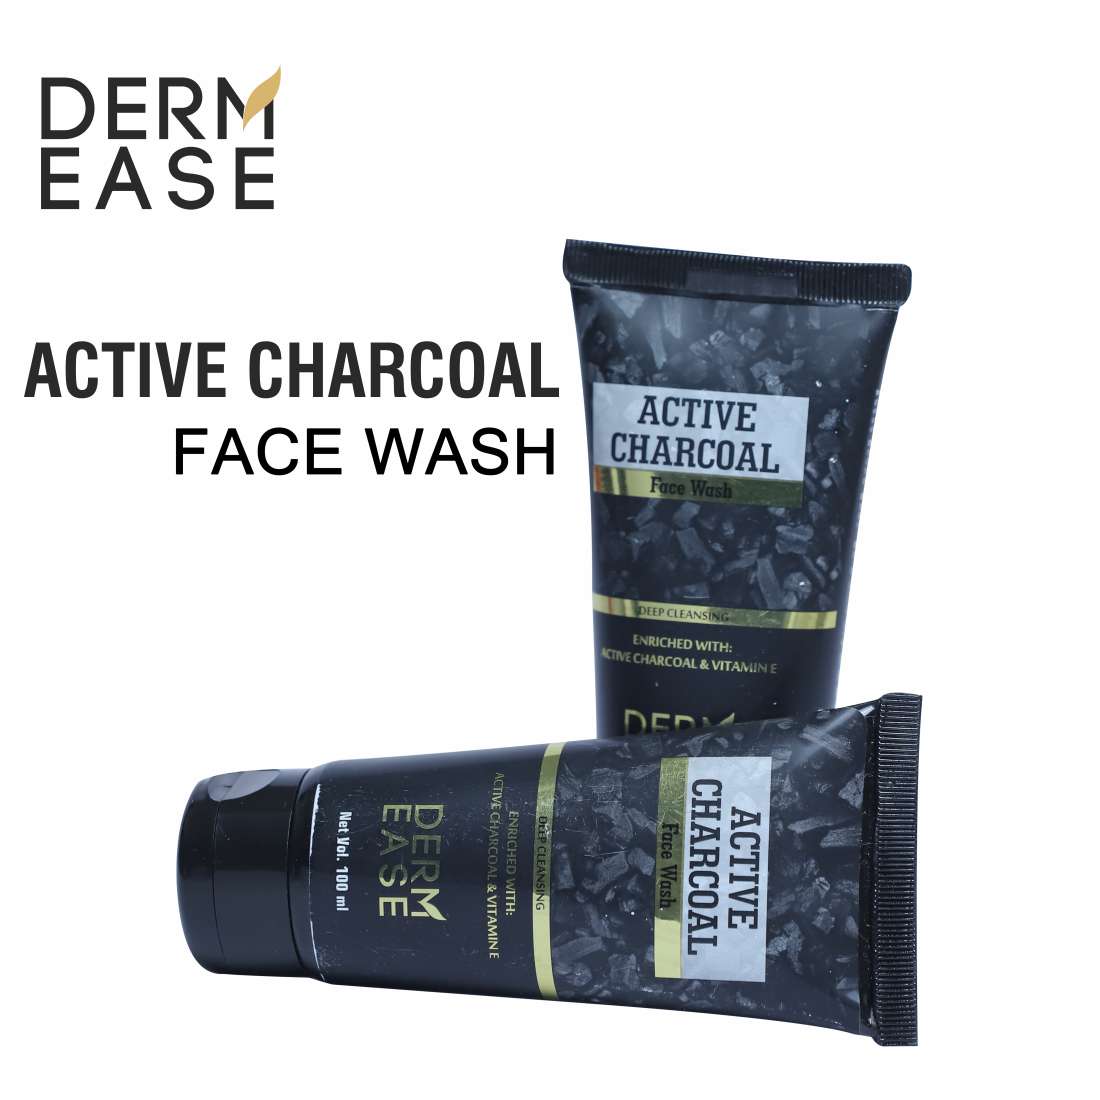 DERM EASE Active Charcoal Face Wash